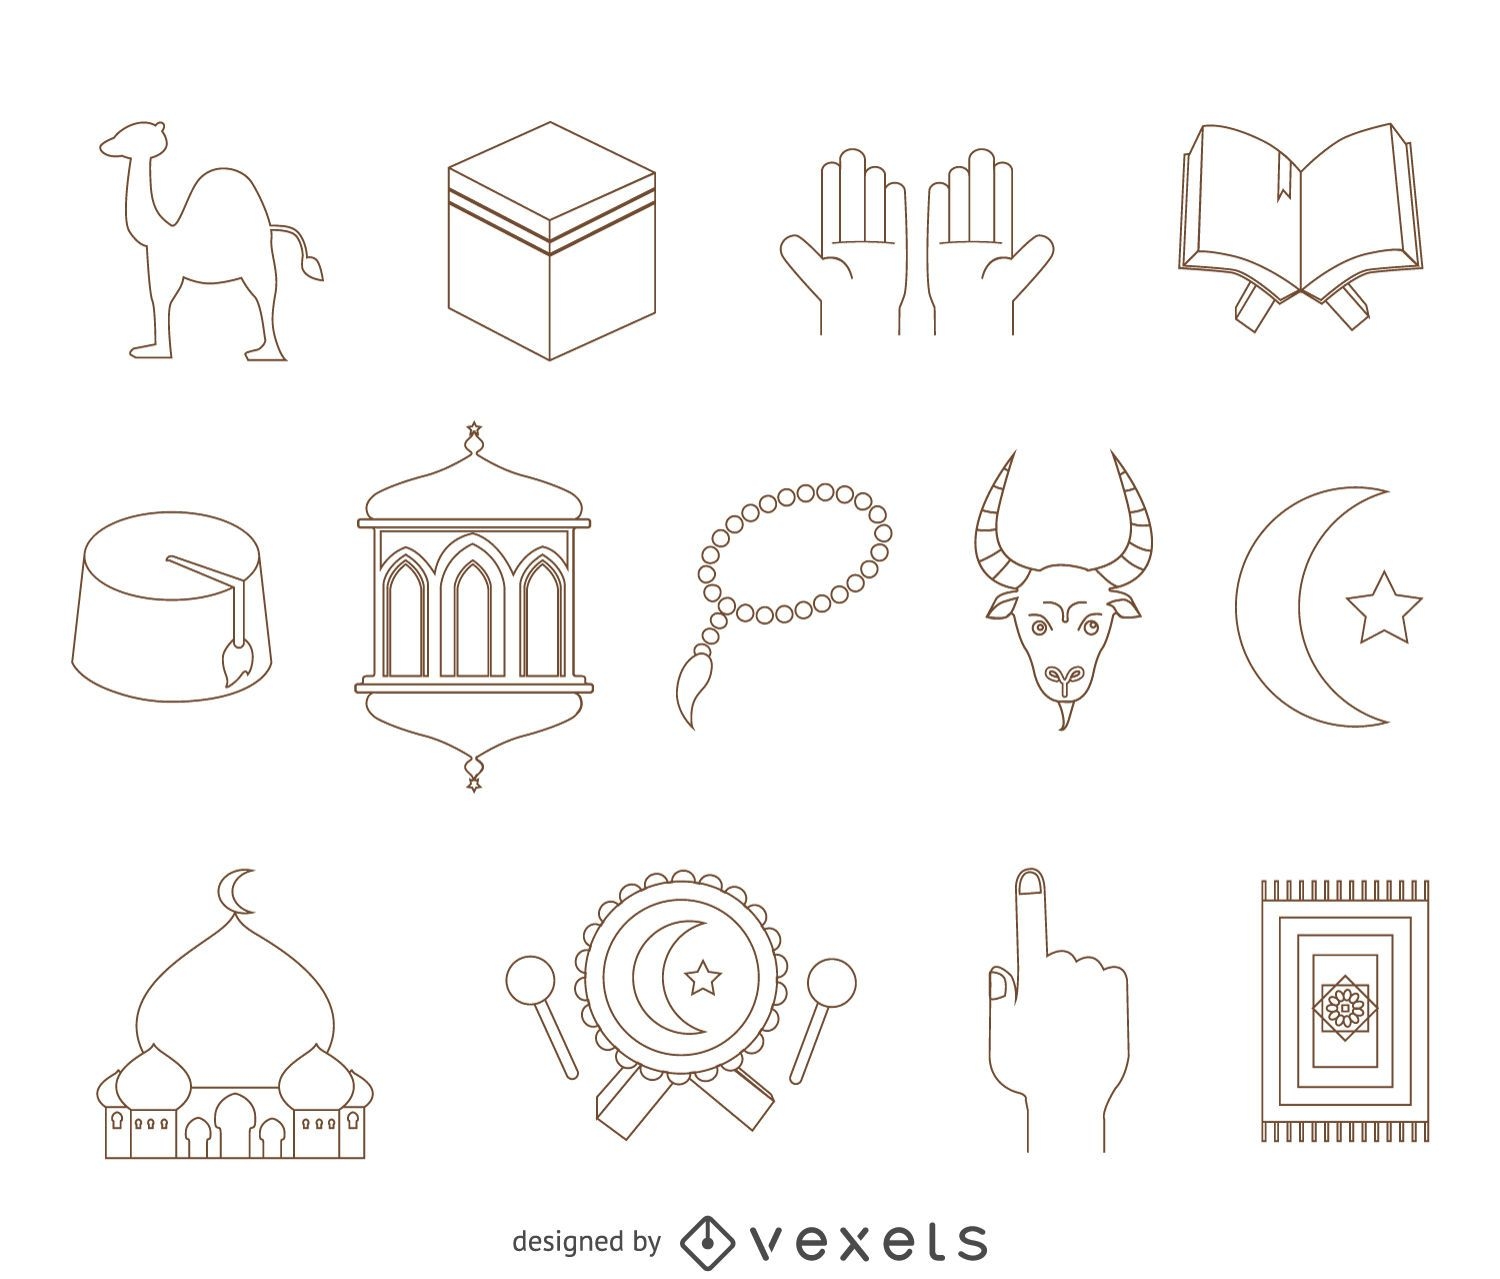 Descarga Vector De Conjunto De Dibujo De Elementos árabes